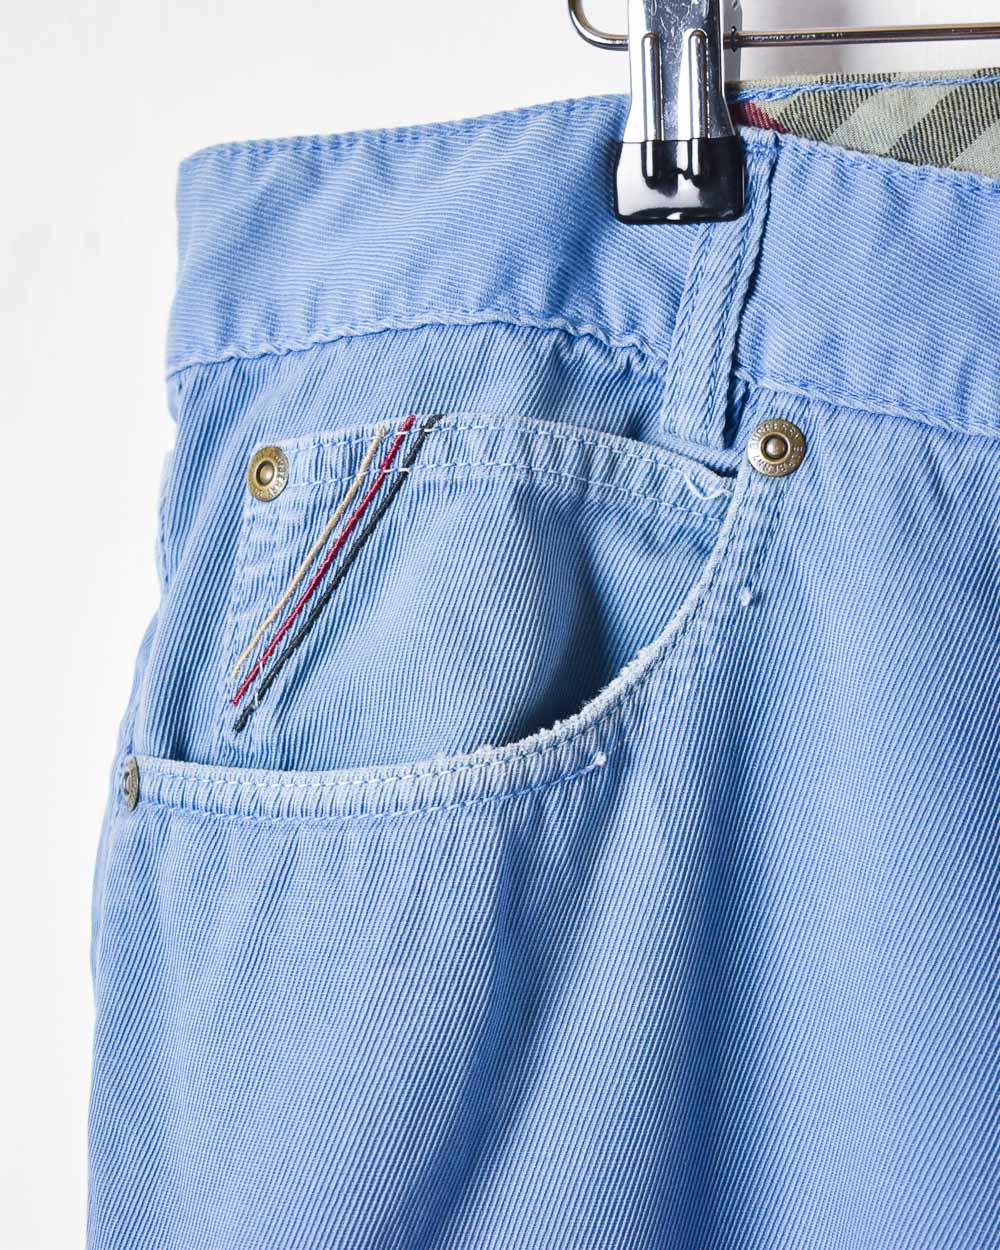 Blue Burberry Trousers - W36 L33